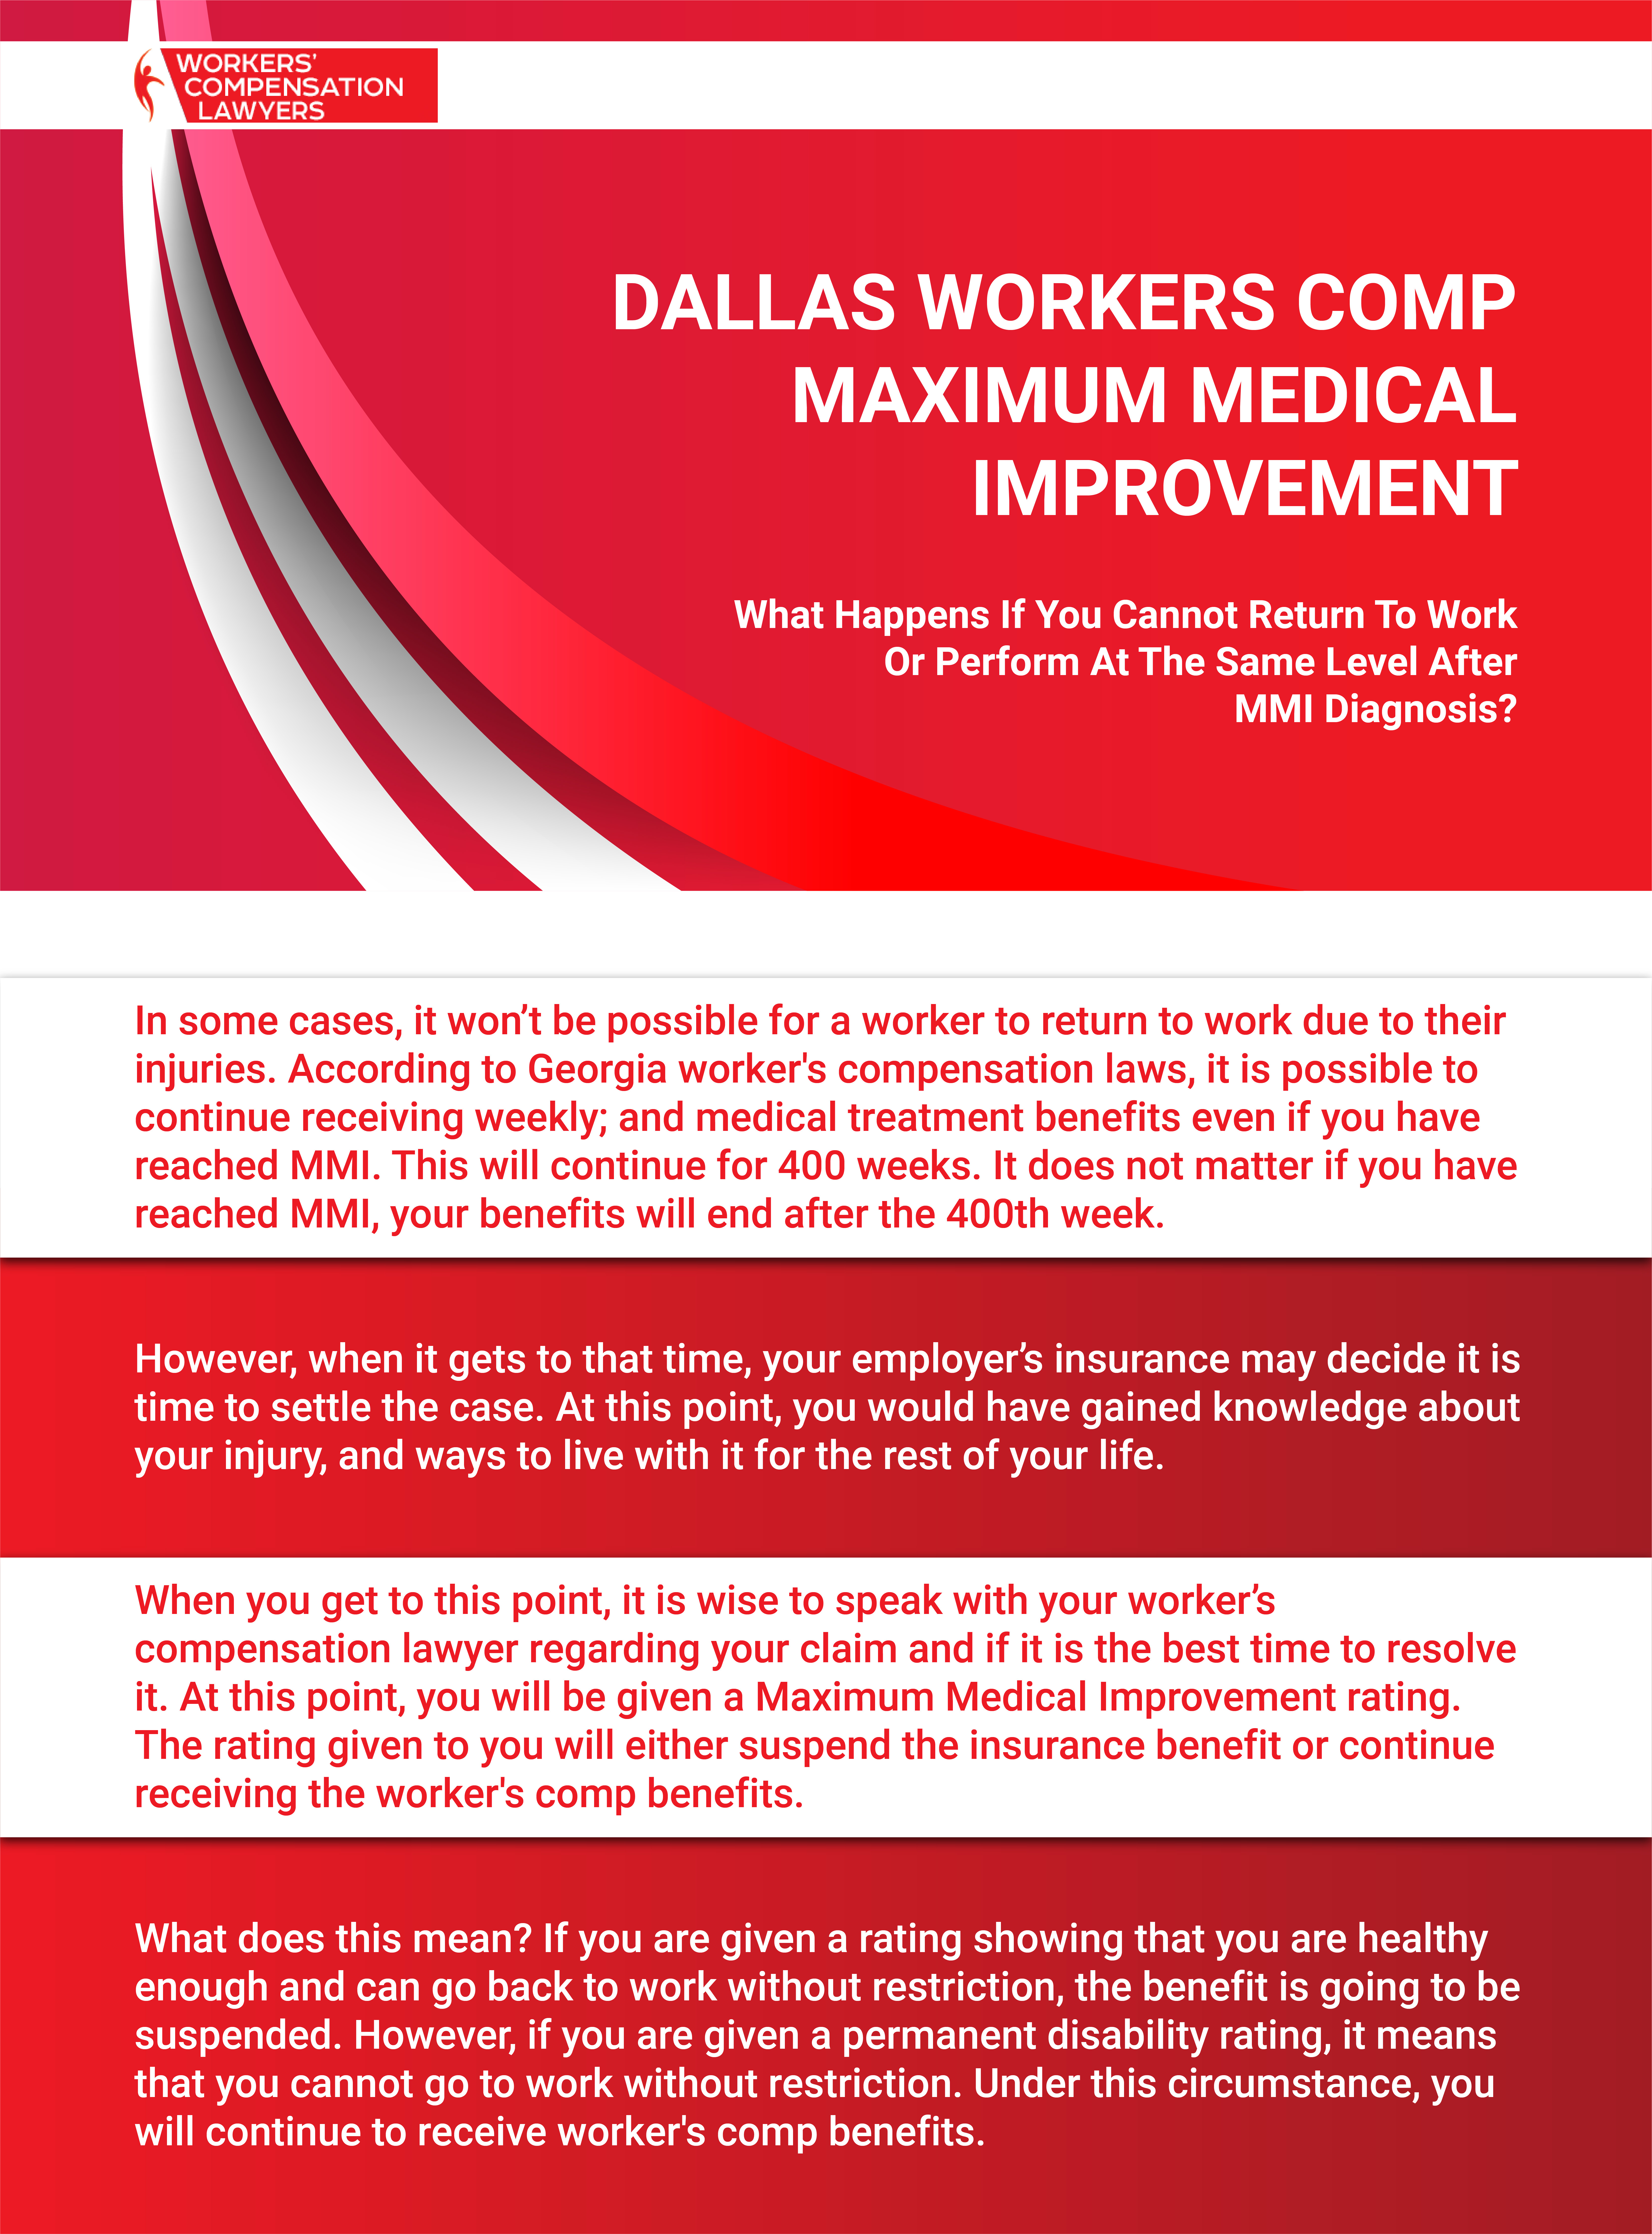 Dallas Maximum Medical Improvement Infographic, Workers' Compensation